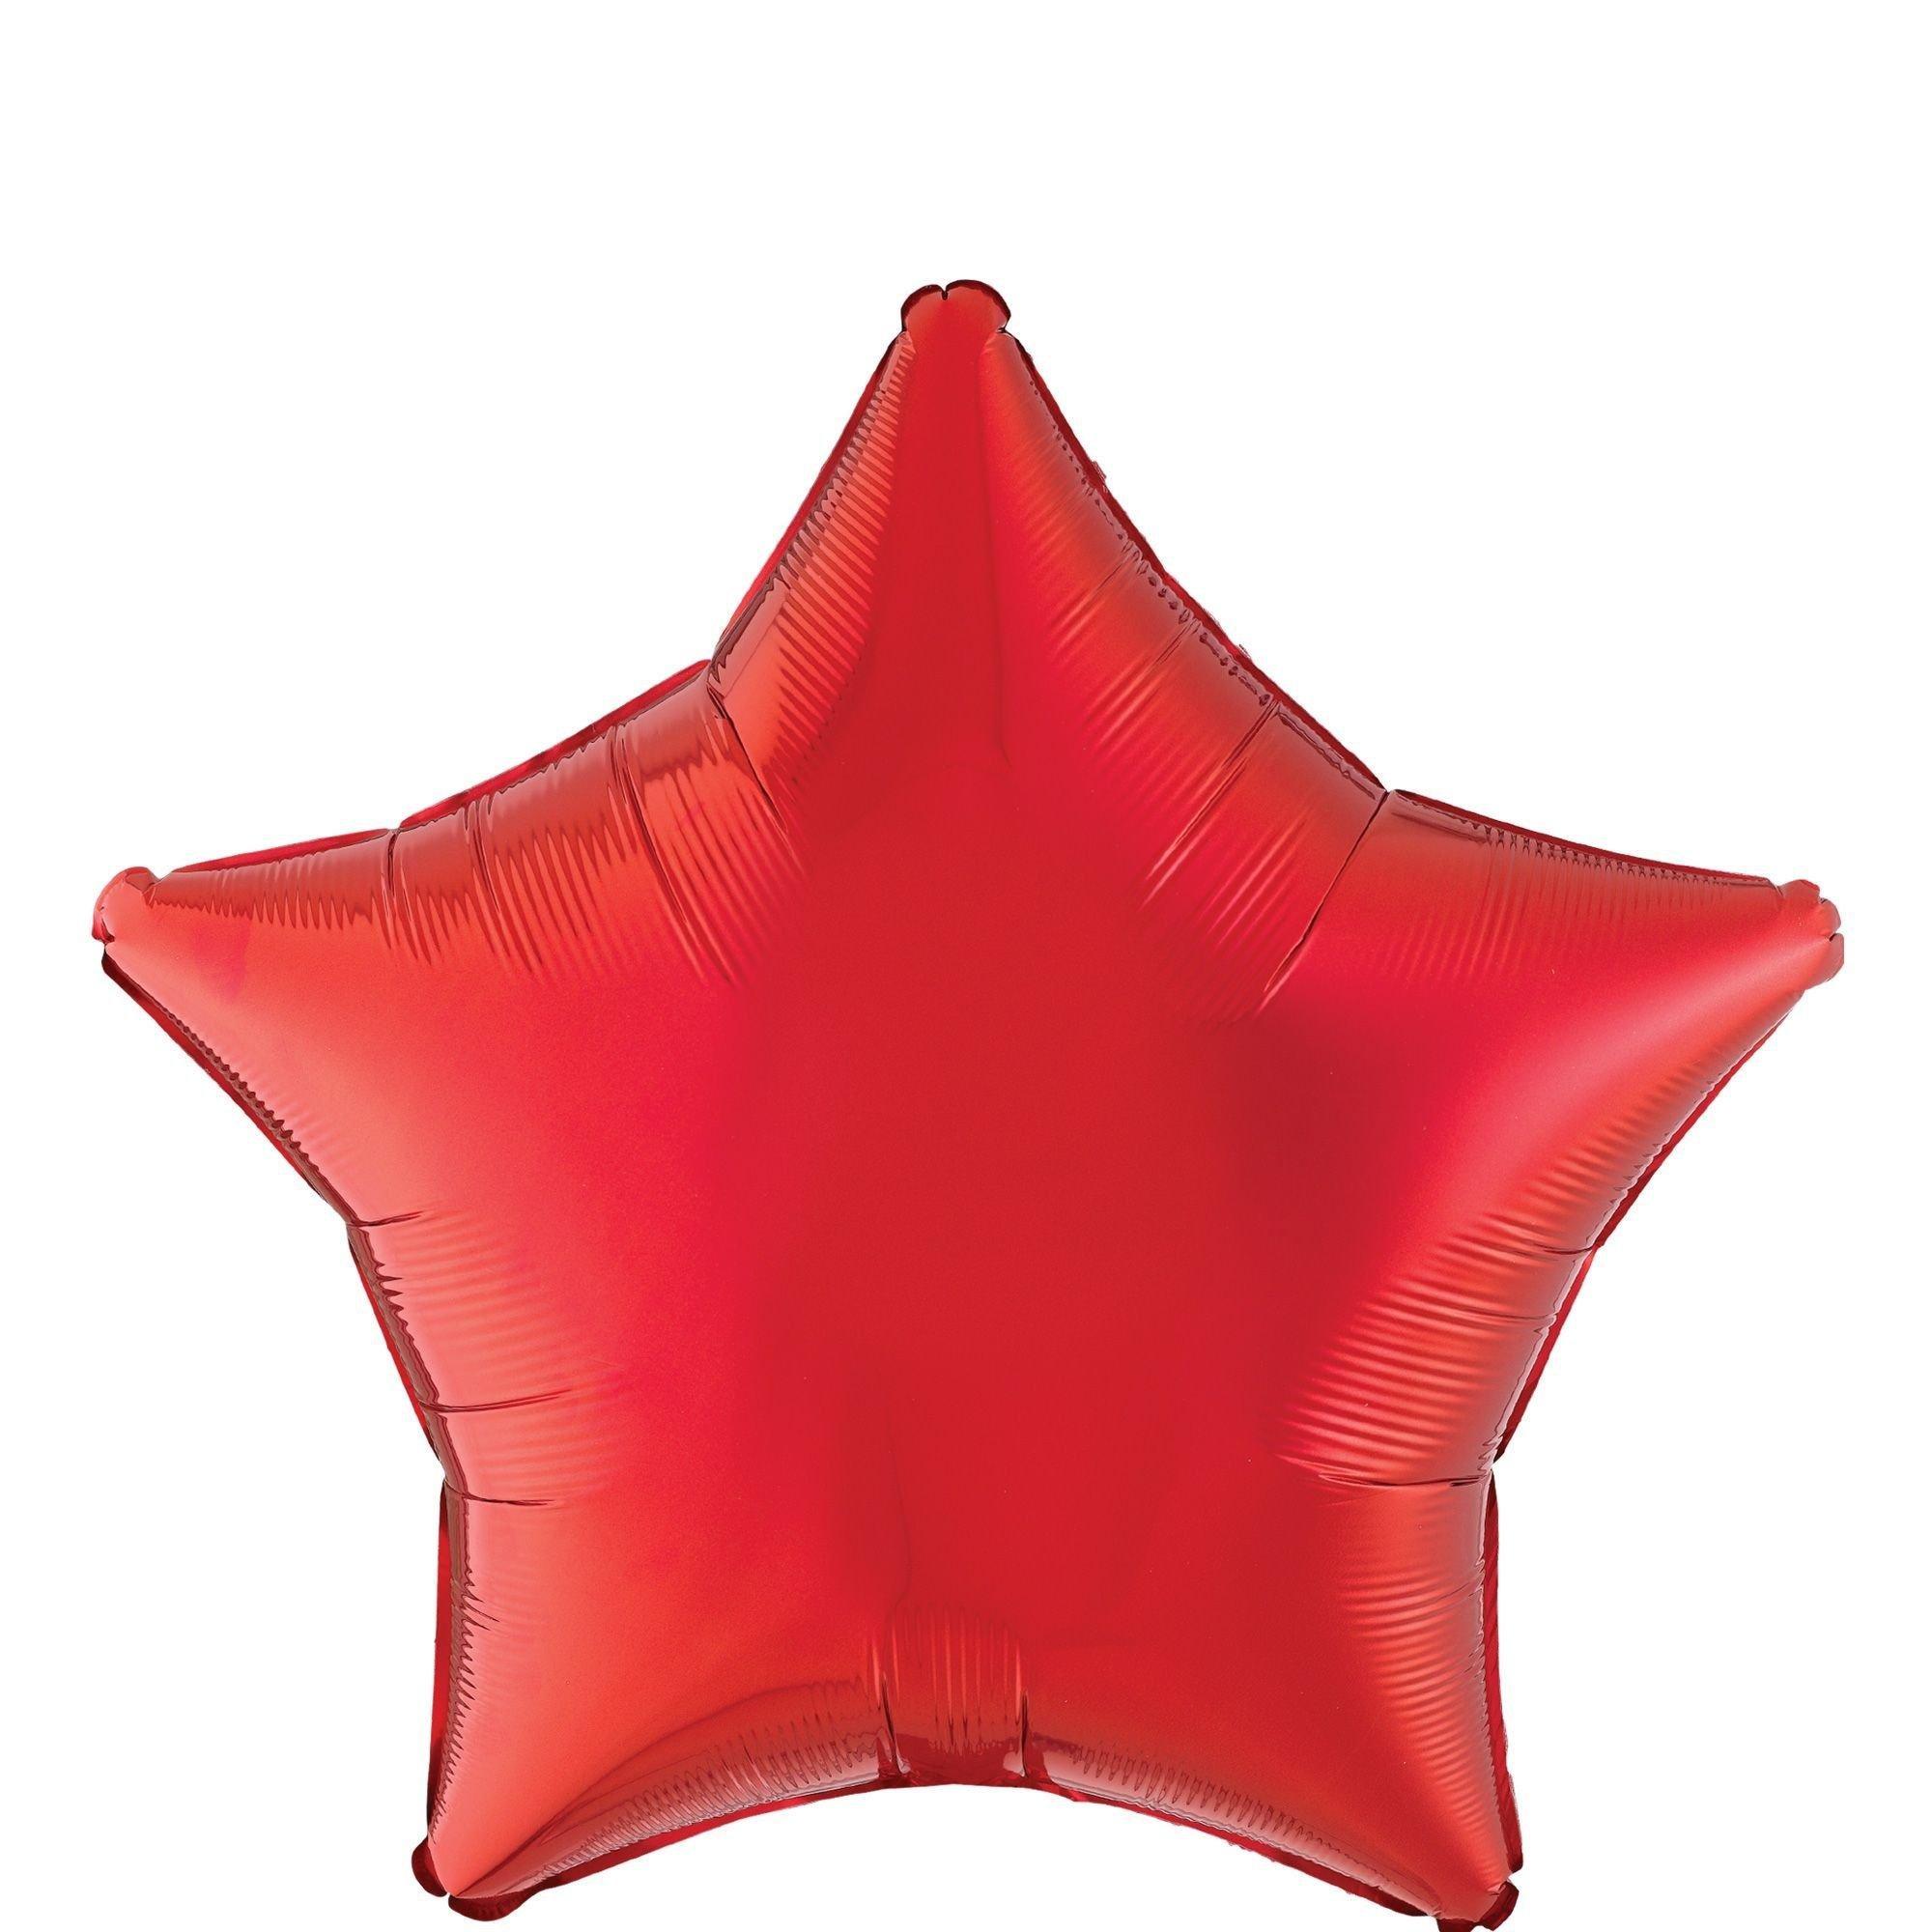 AirLoonz Patriotic Star Cluster Set & Patriotic Stars Balloon Bouquet, 5pc